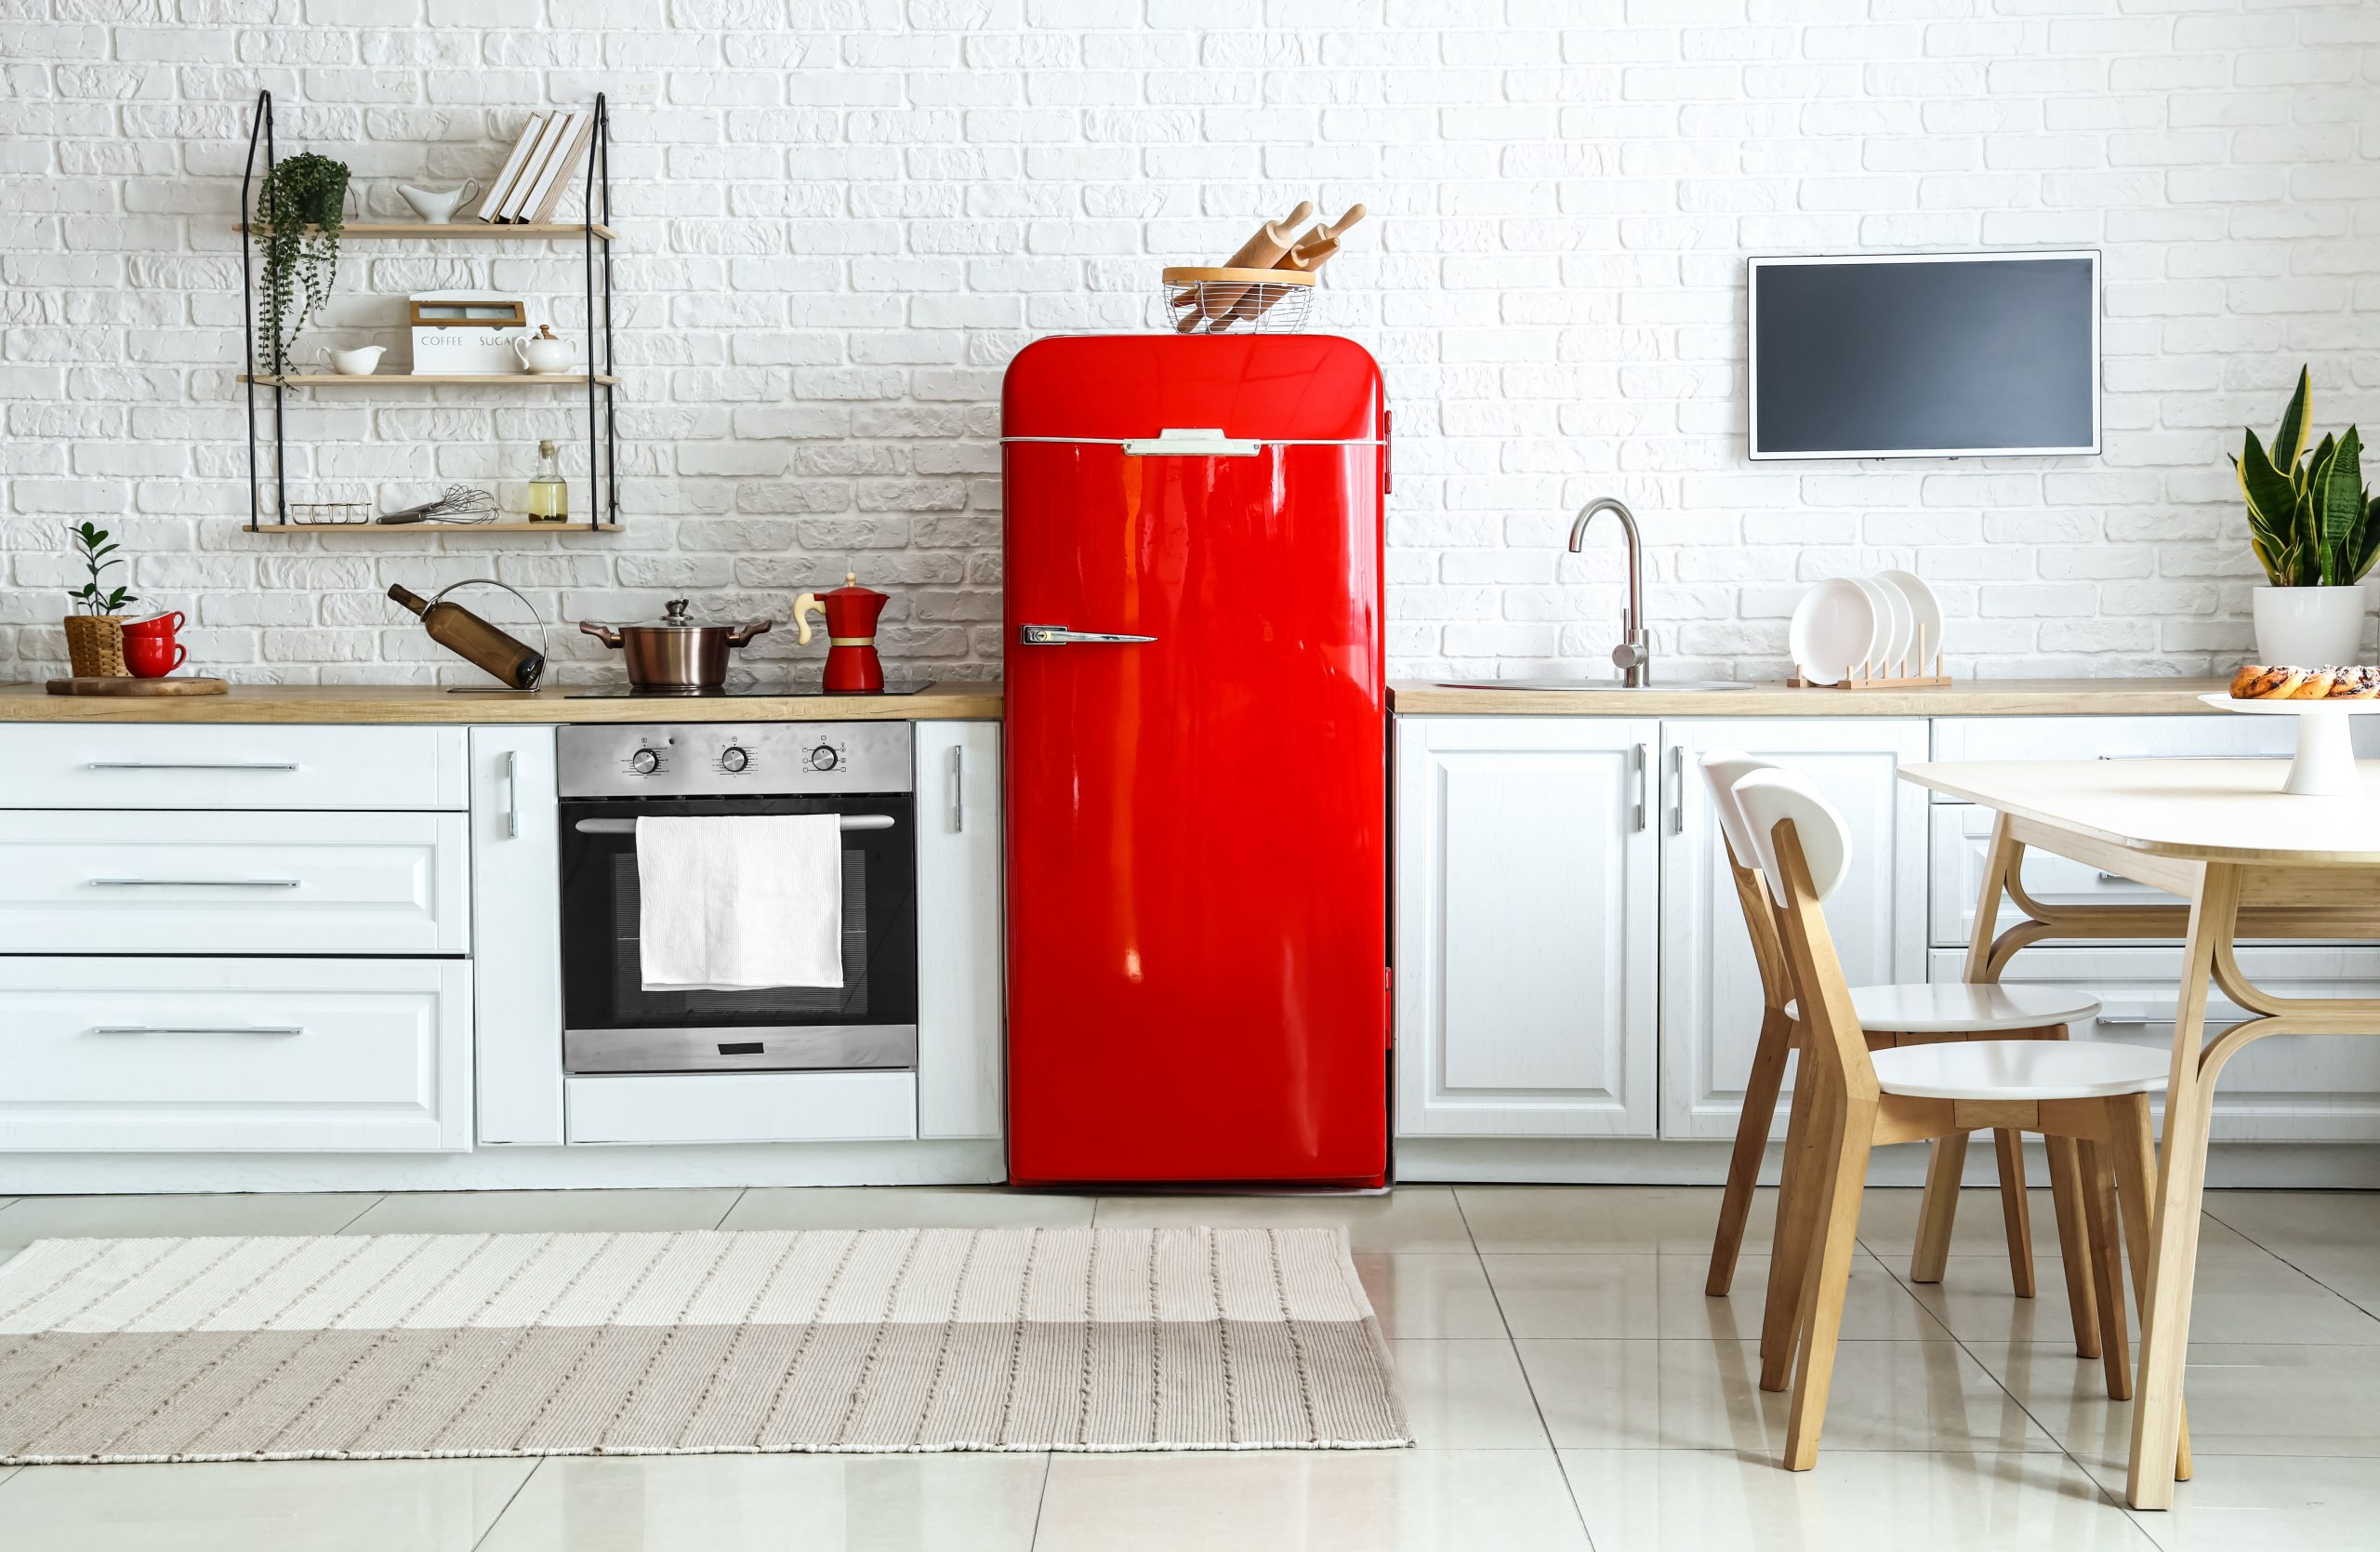 červená chladnička v bílé kuchyni